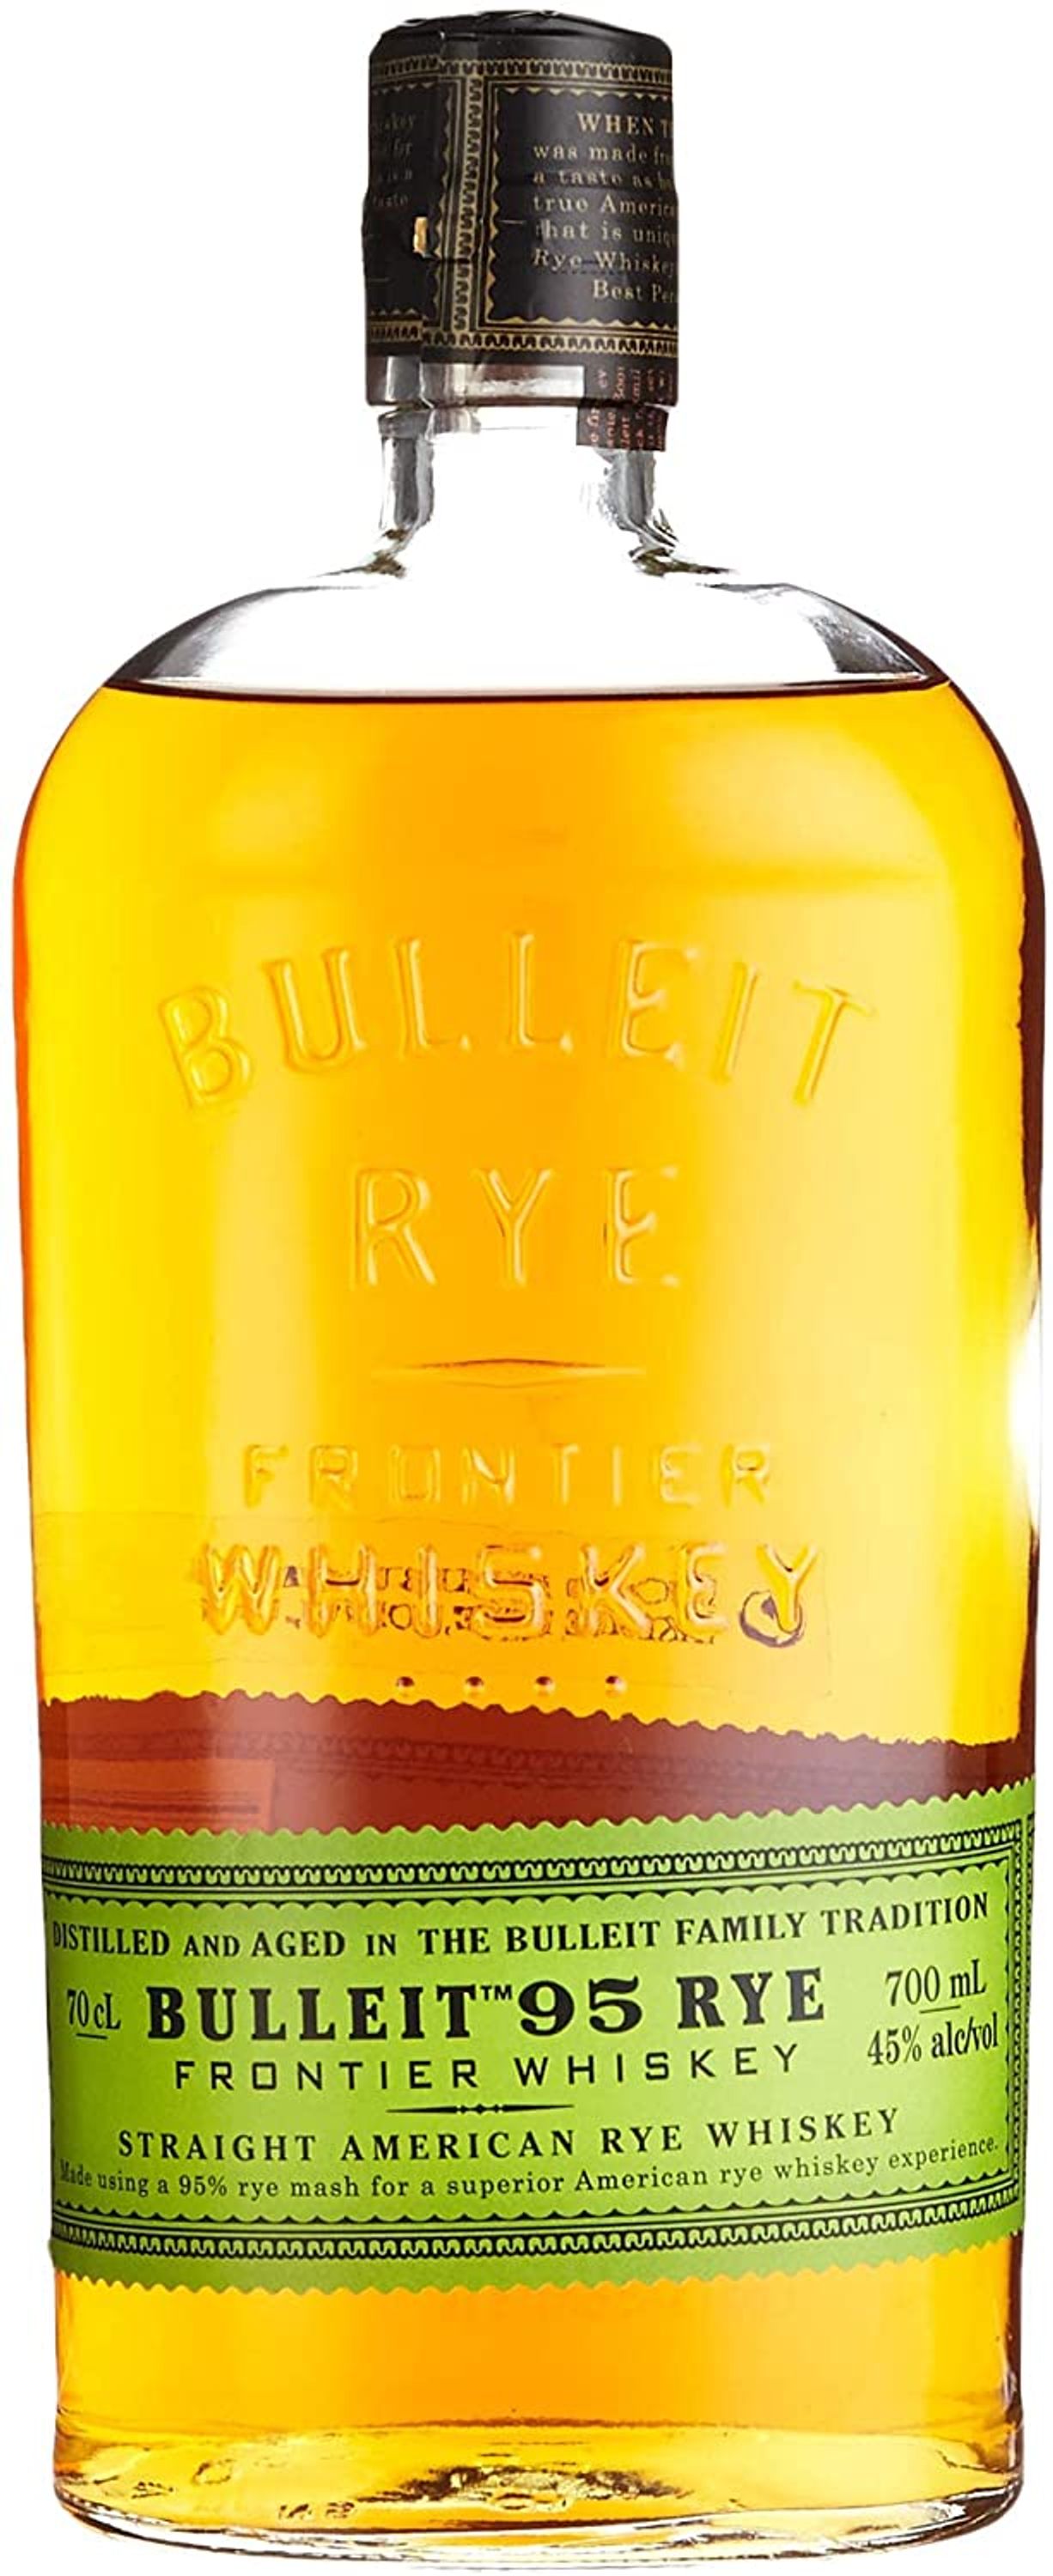 Bulleit Rye Straight American Rye Whiskey 0.7l, alc. 45% by volume